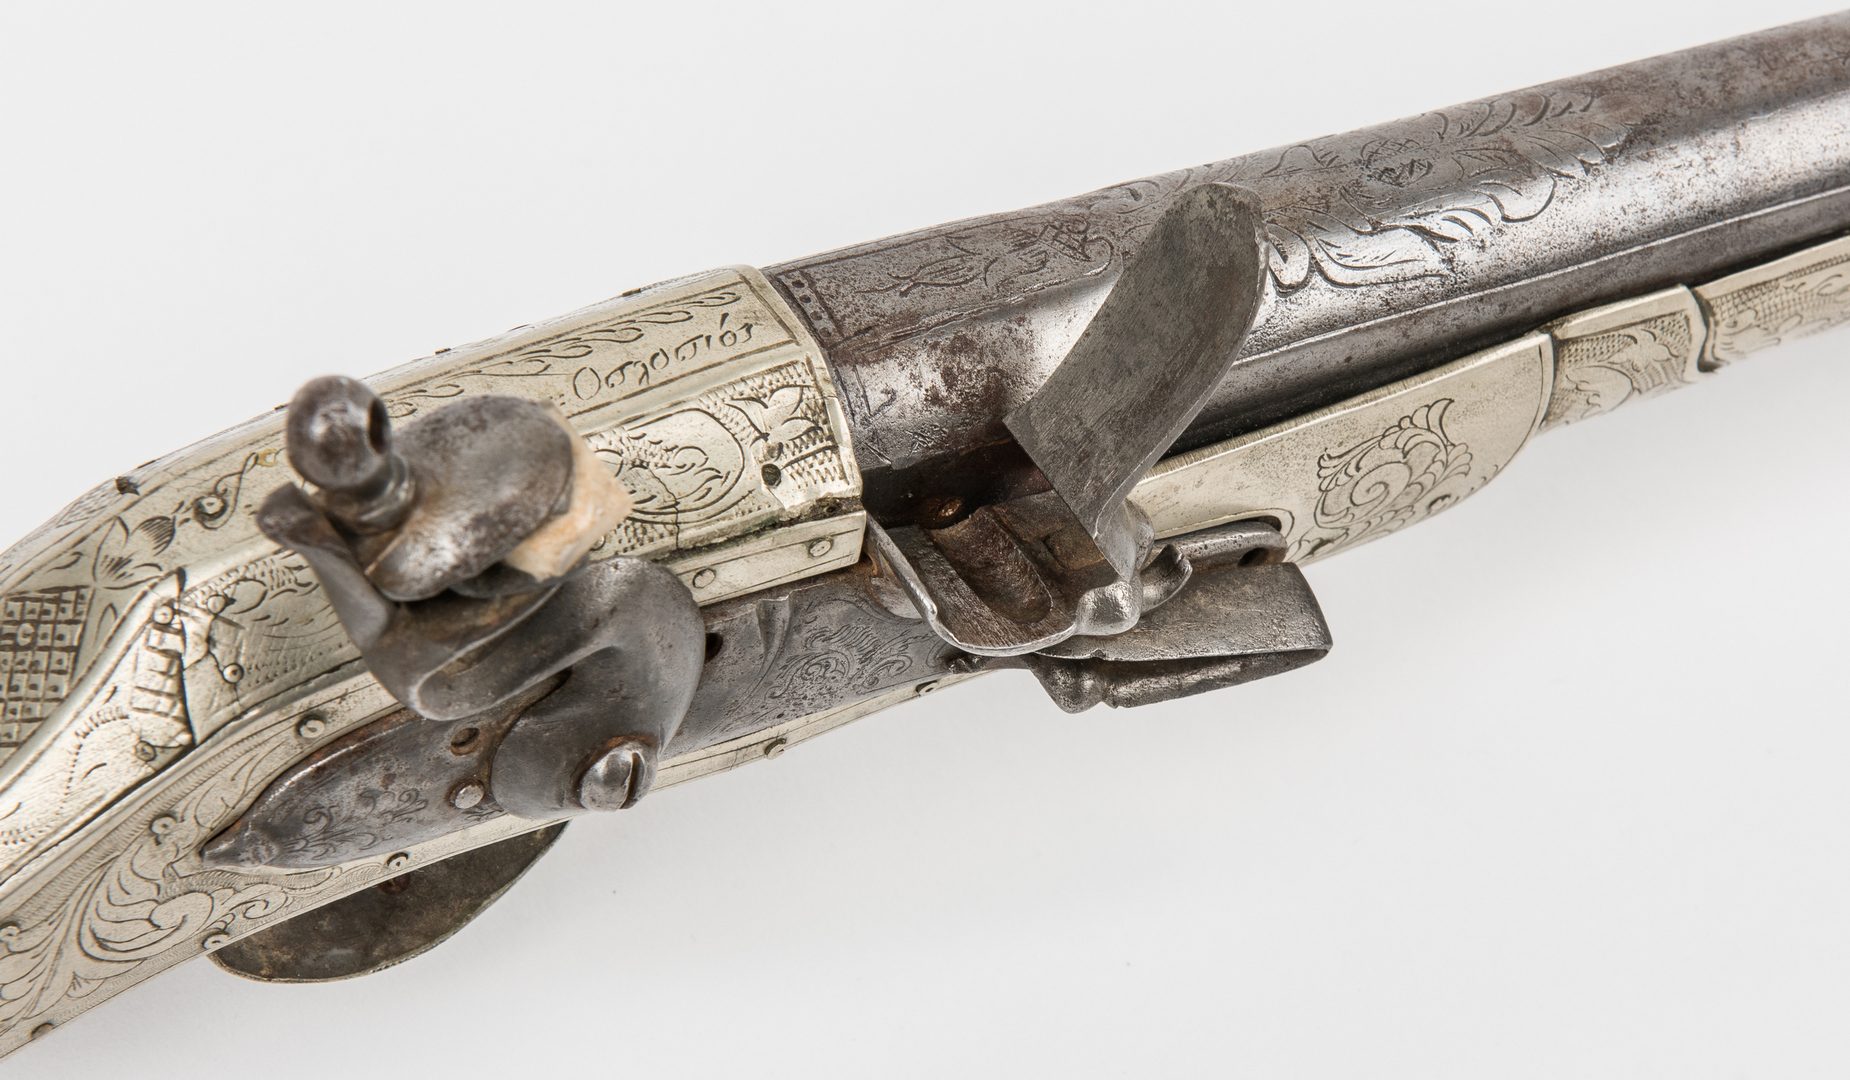 Lot 780: Turkish Flintlock Musketoon, .72 cal, with Dagger